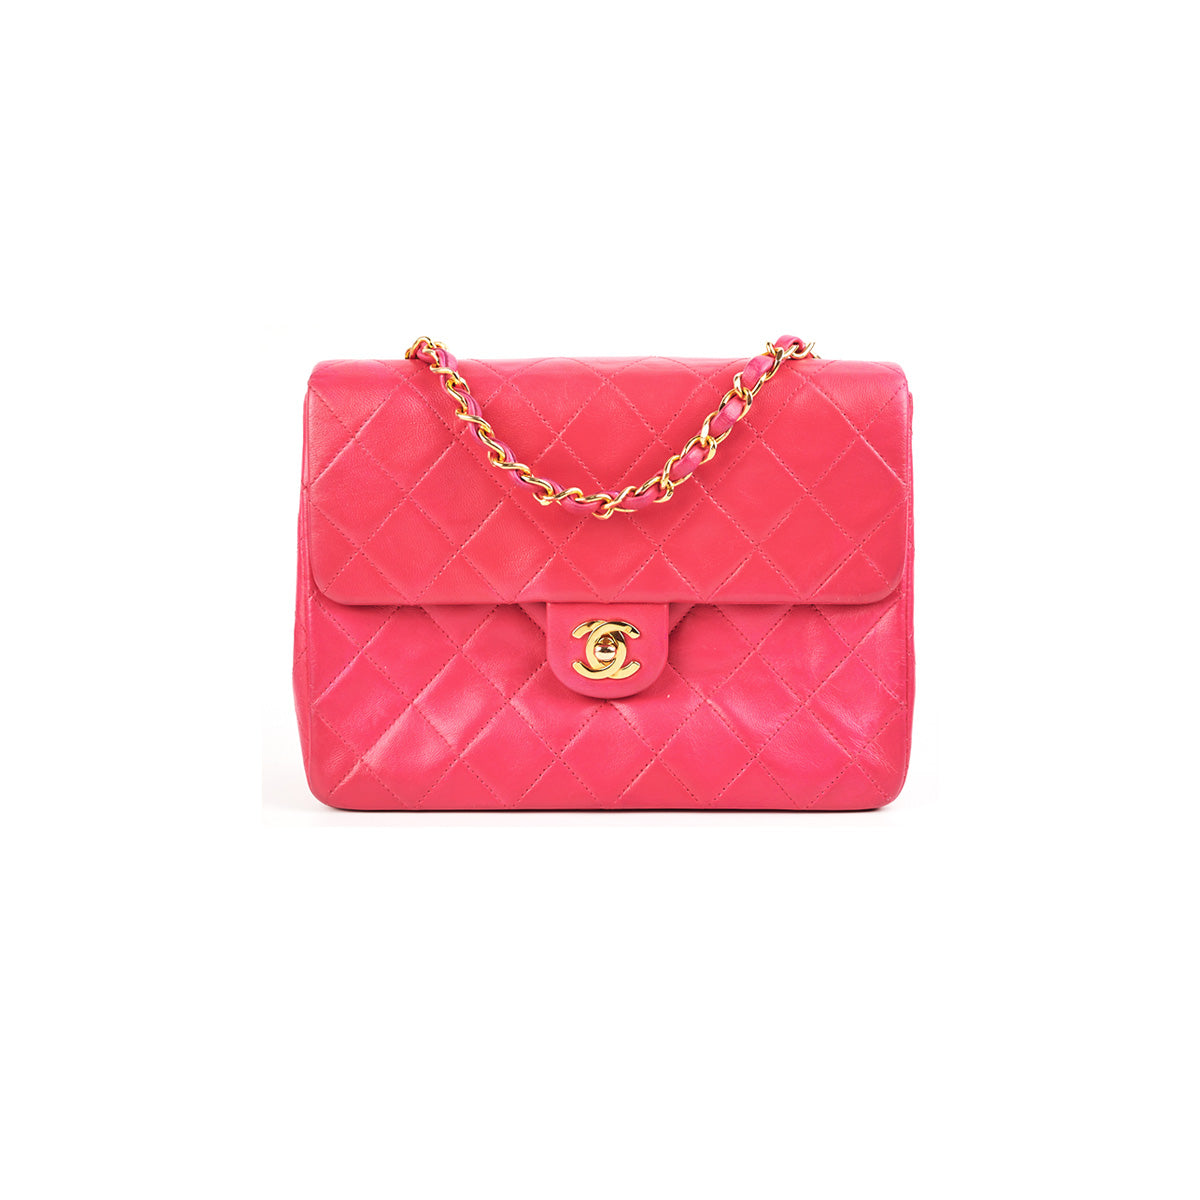 Chanel Vintage Flap Bag Pink - THE PURSE AFFAIR